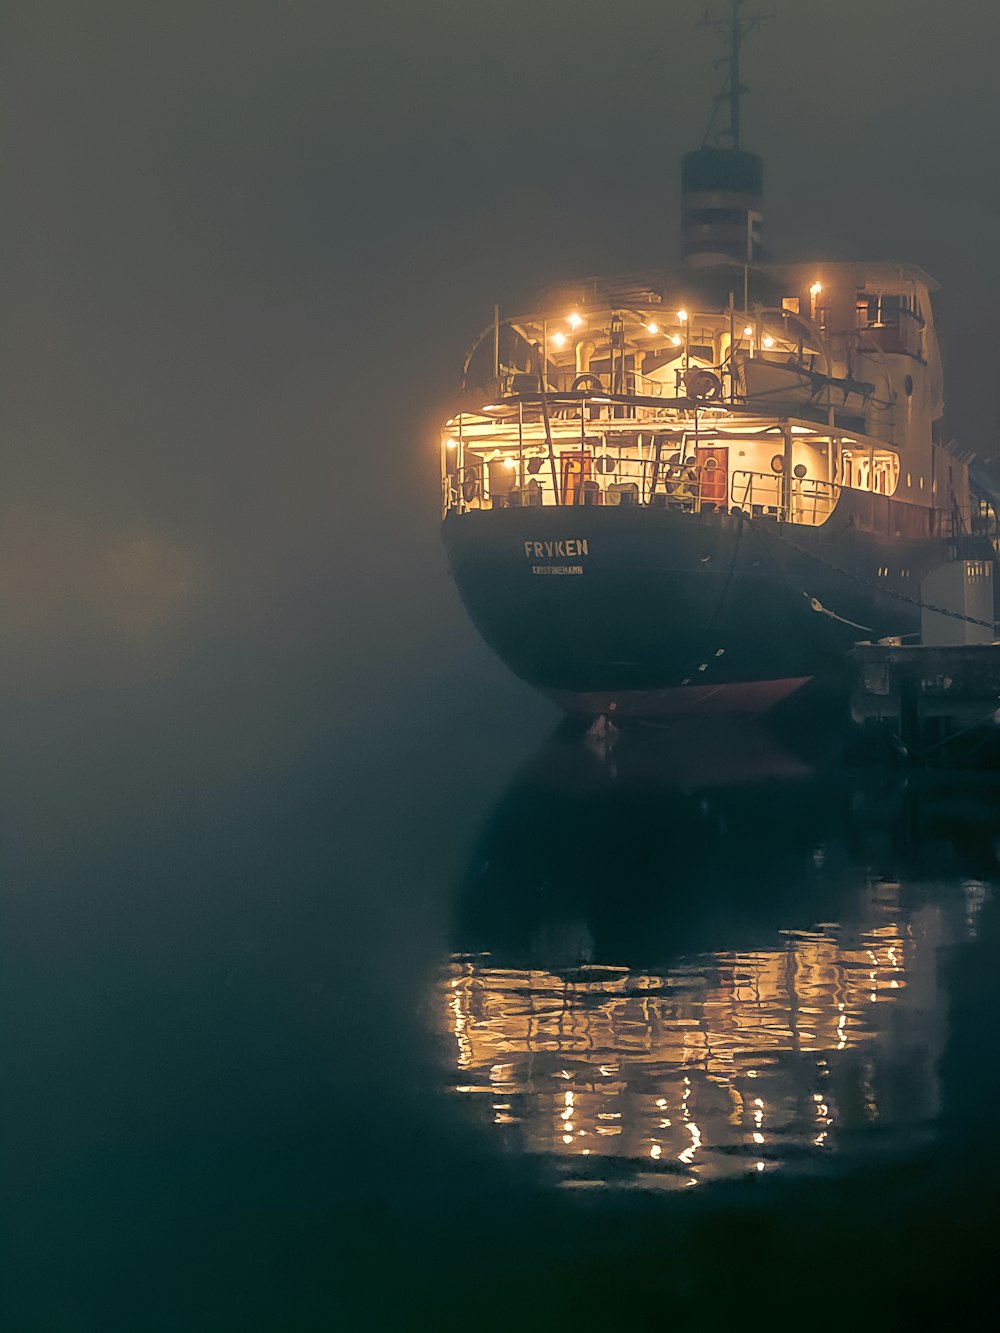 navio azul e branco na água durante a noite